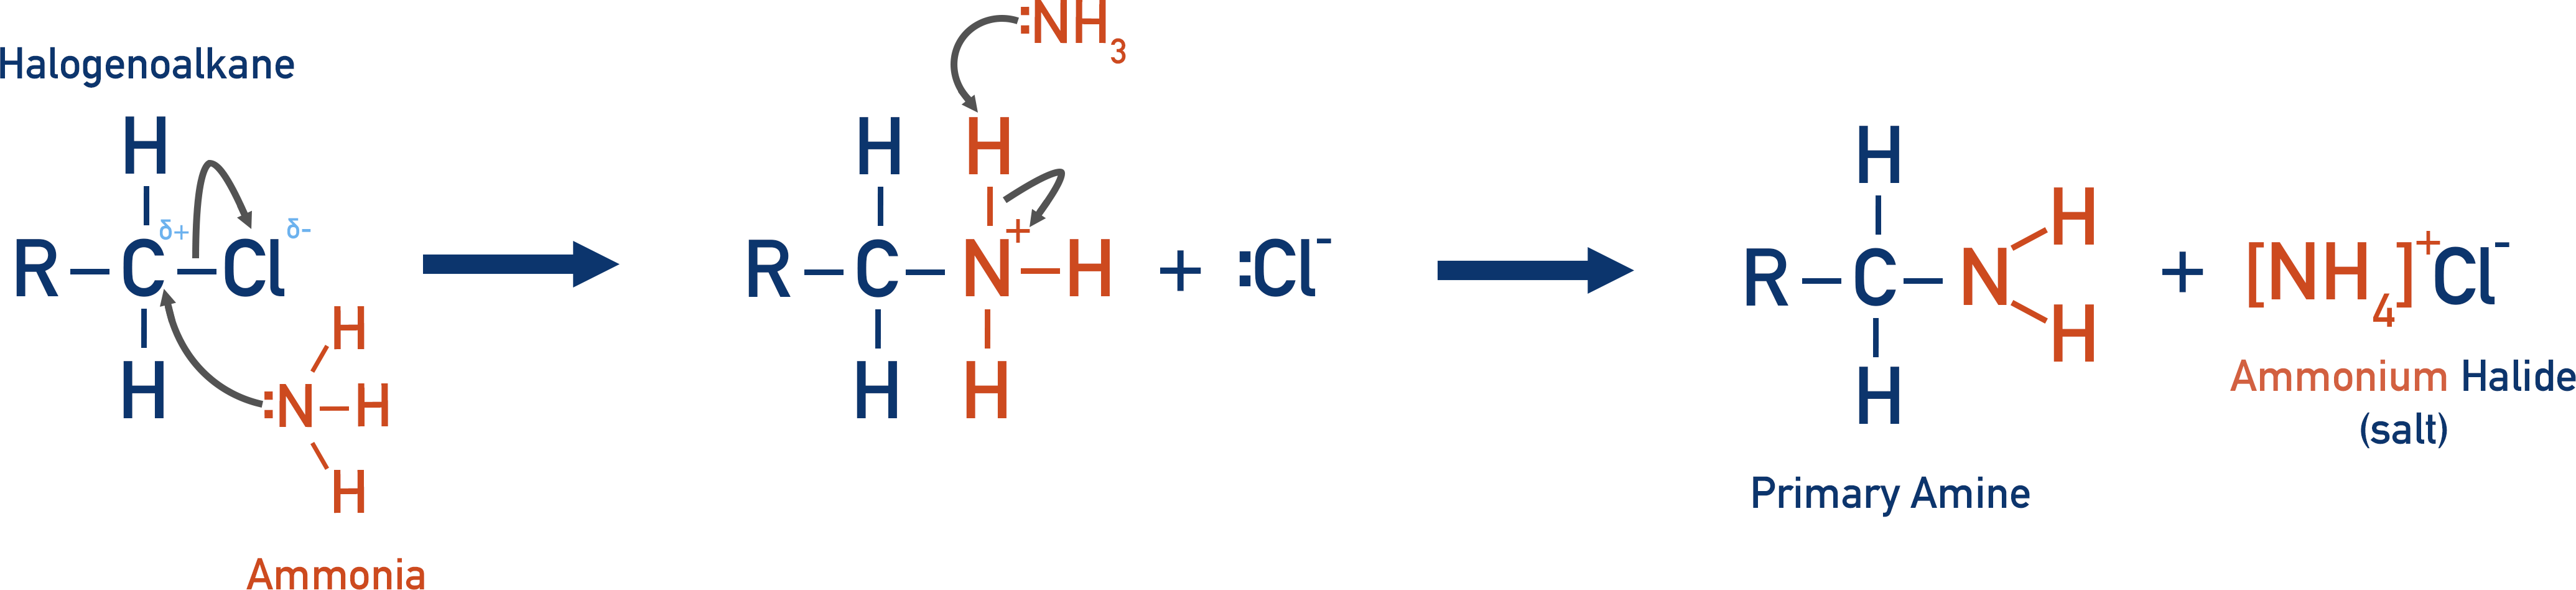 forming primary amine from halogenoalkane and ammonia mechanism